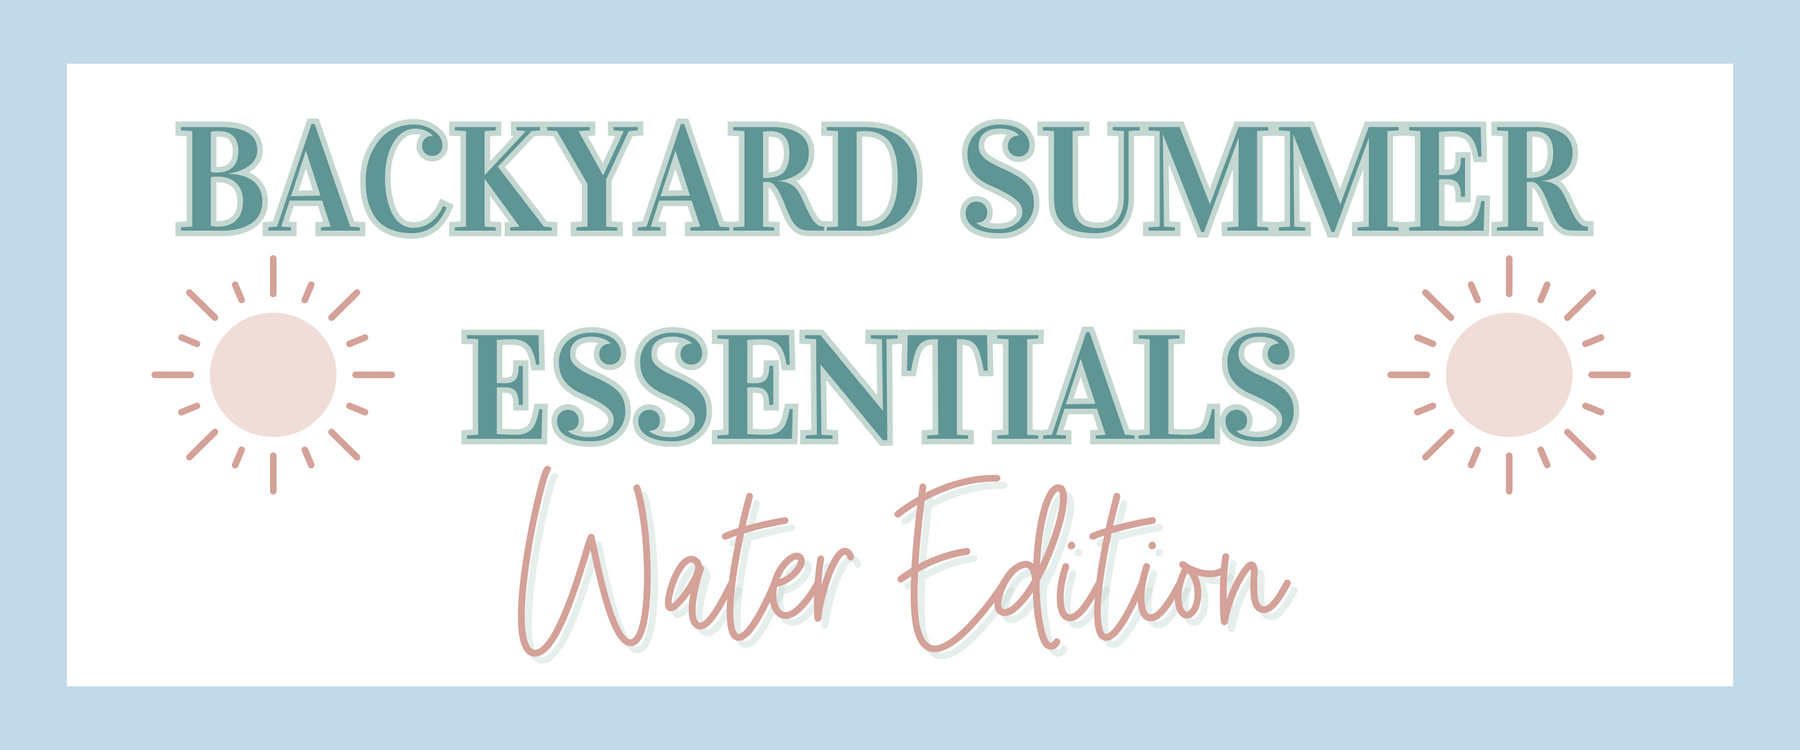 Backyard Summer Essentials: Water Edition